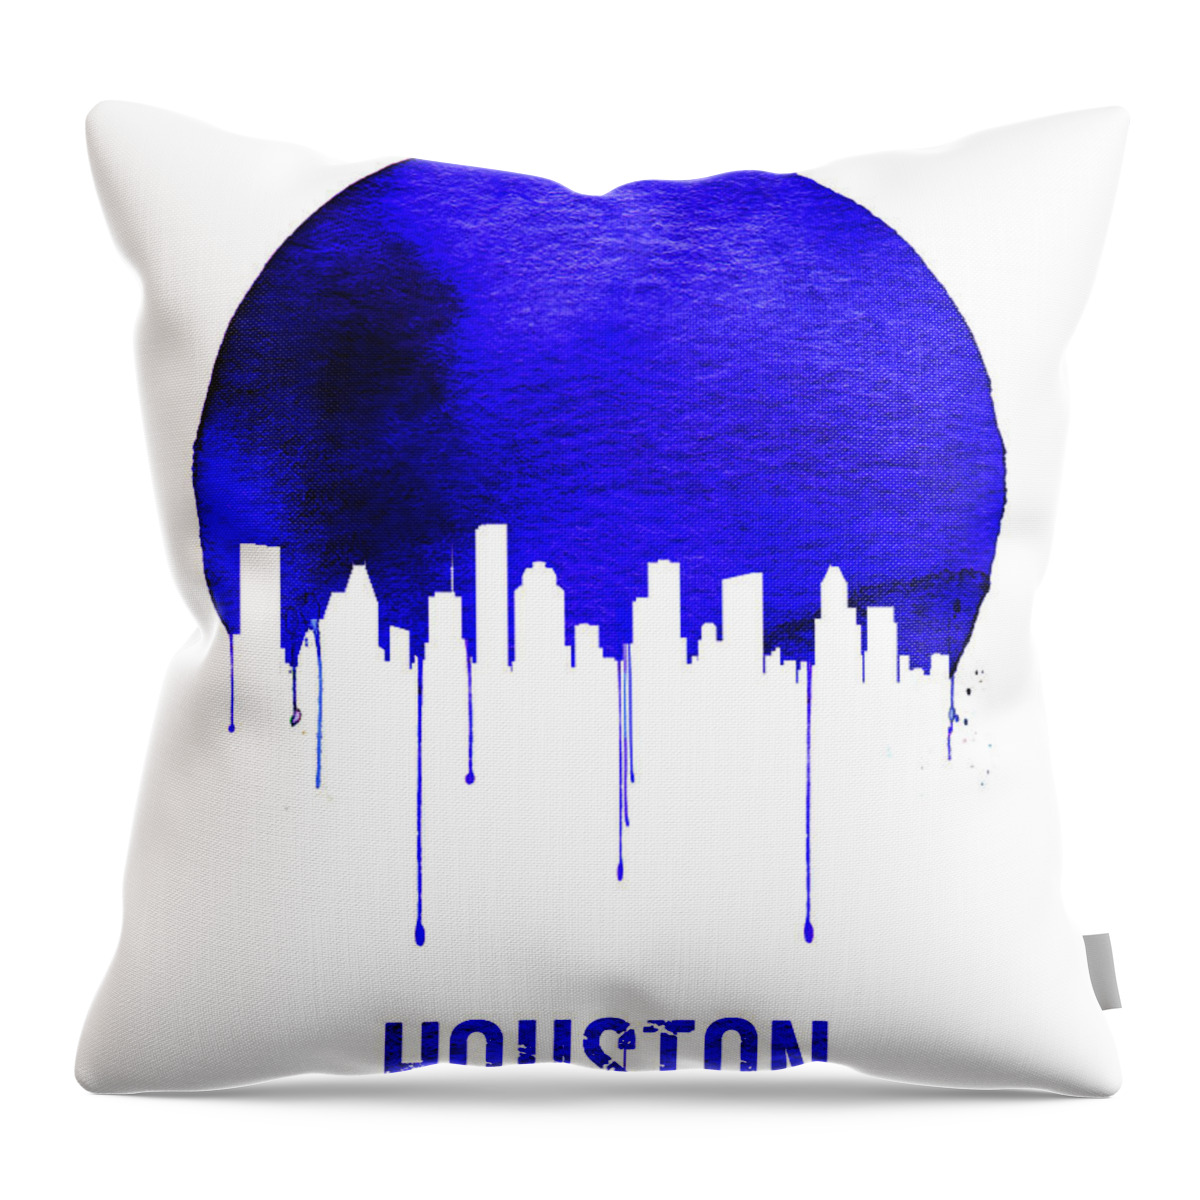 Houston Throw Pillow featuring the digital art Houston Skyline Blue by Naxart Studio